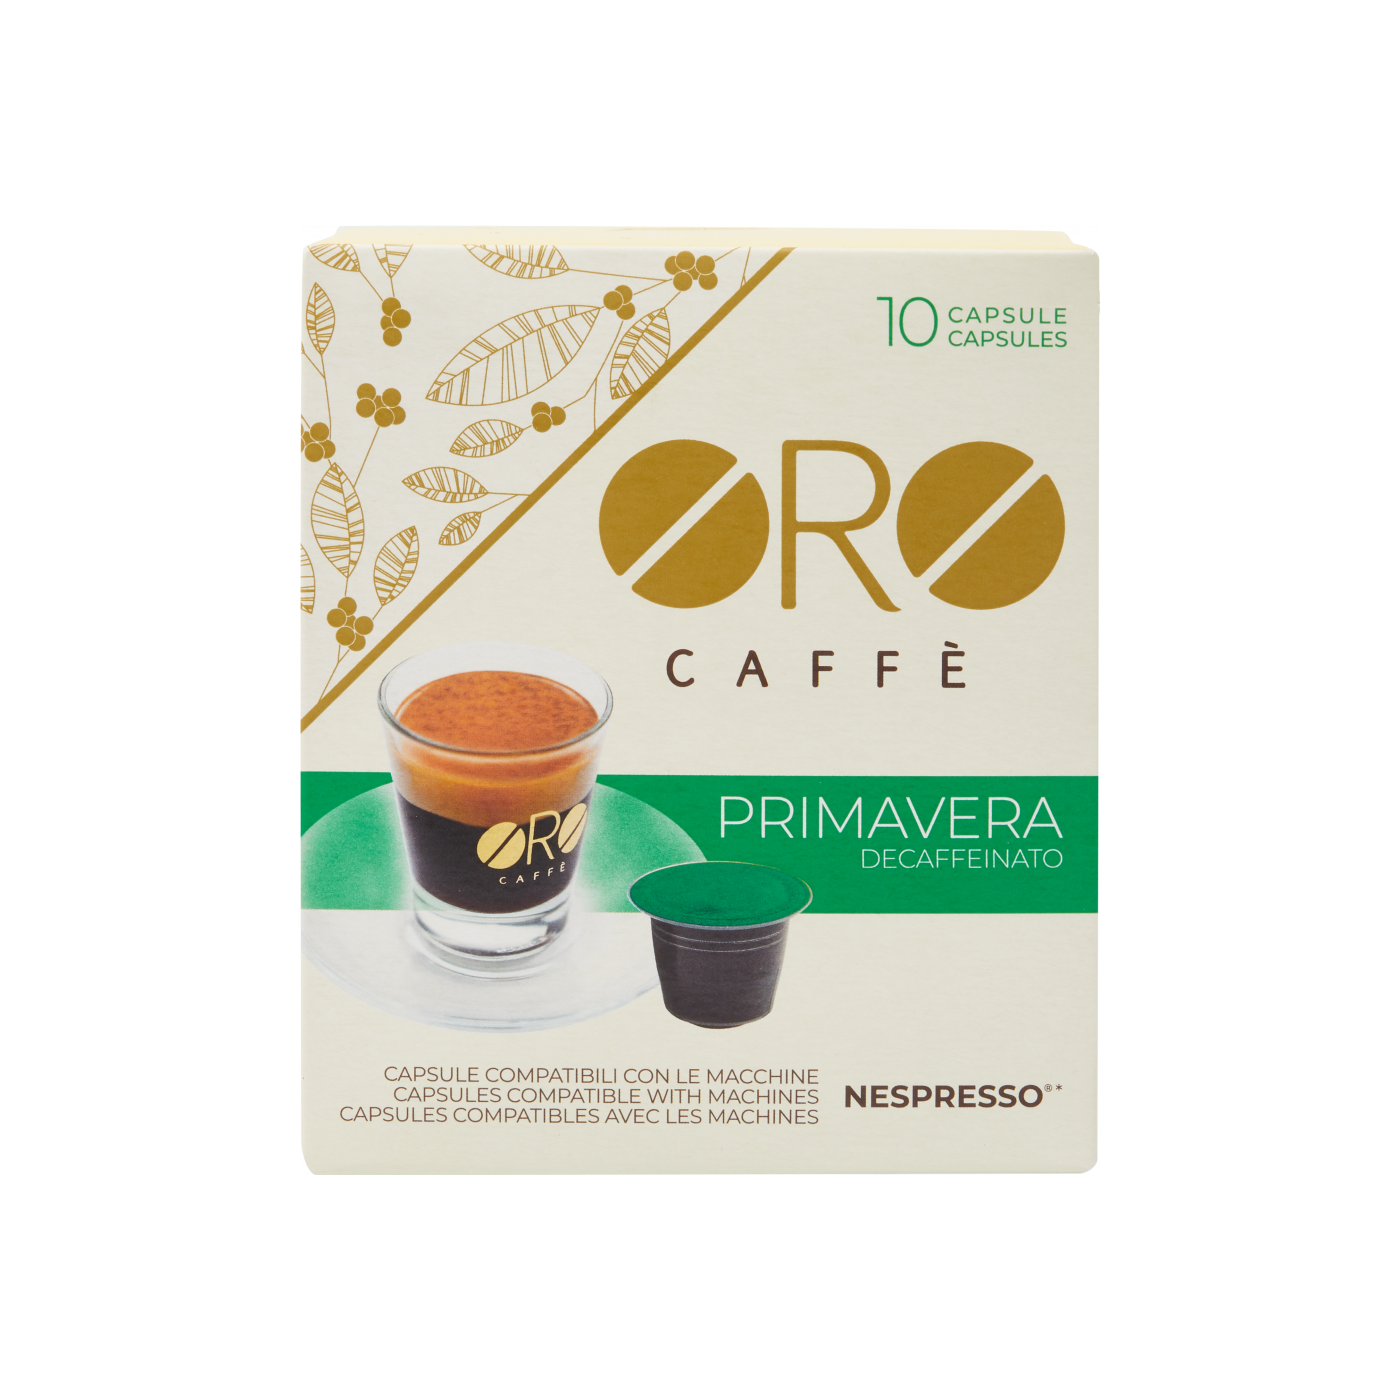 ORO Caffè Primavera DECAF Capsules for Nespresso (10)